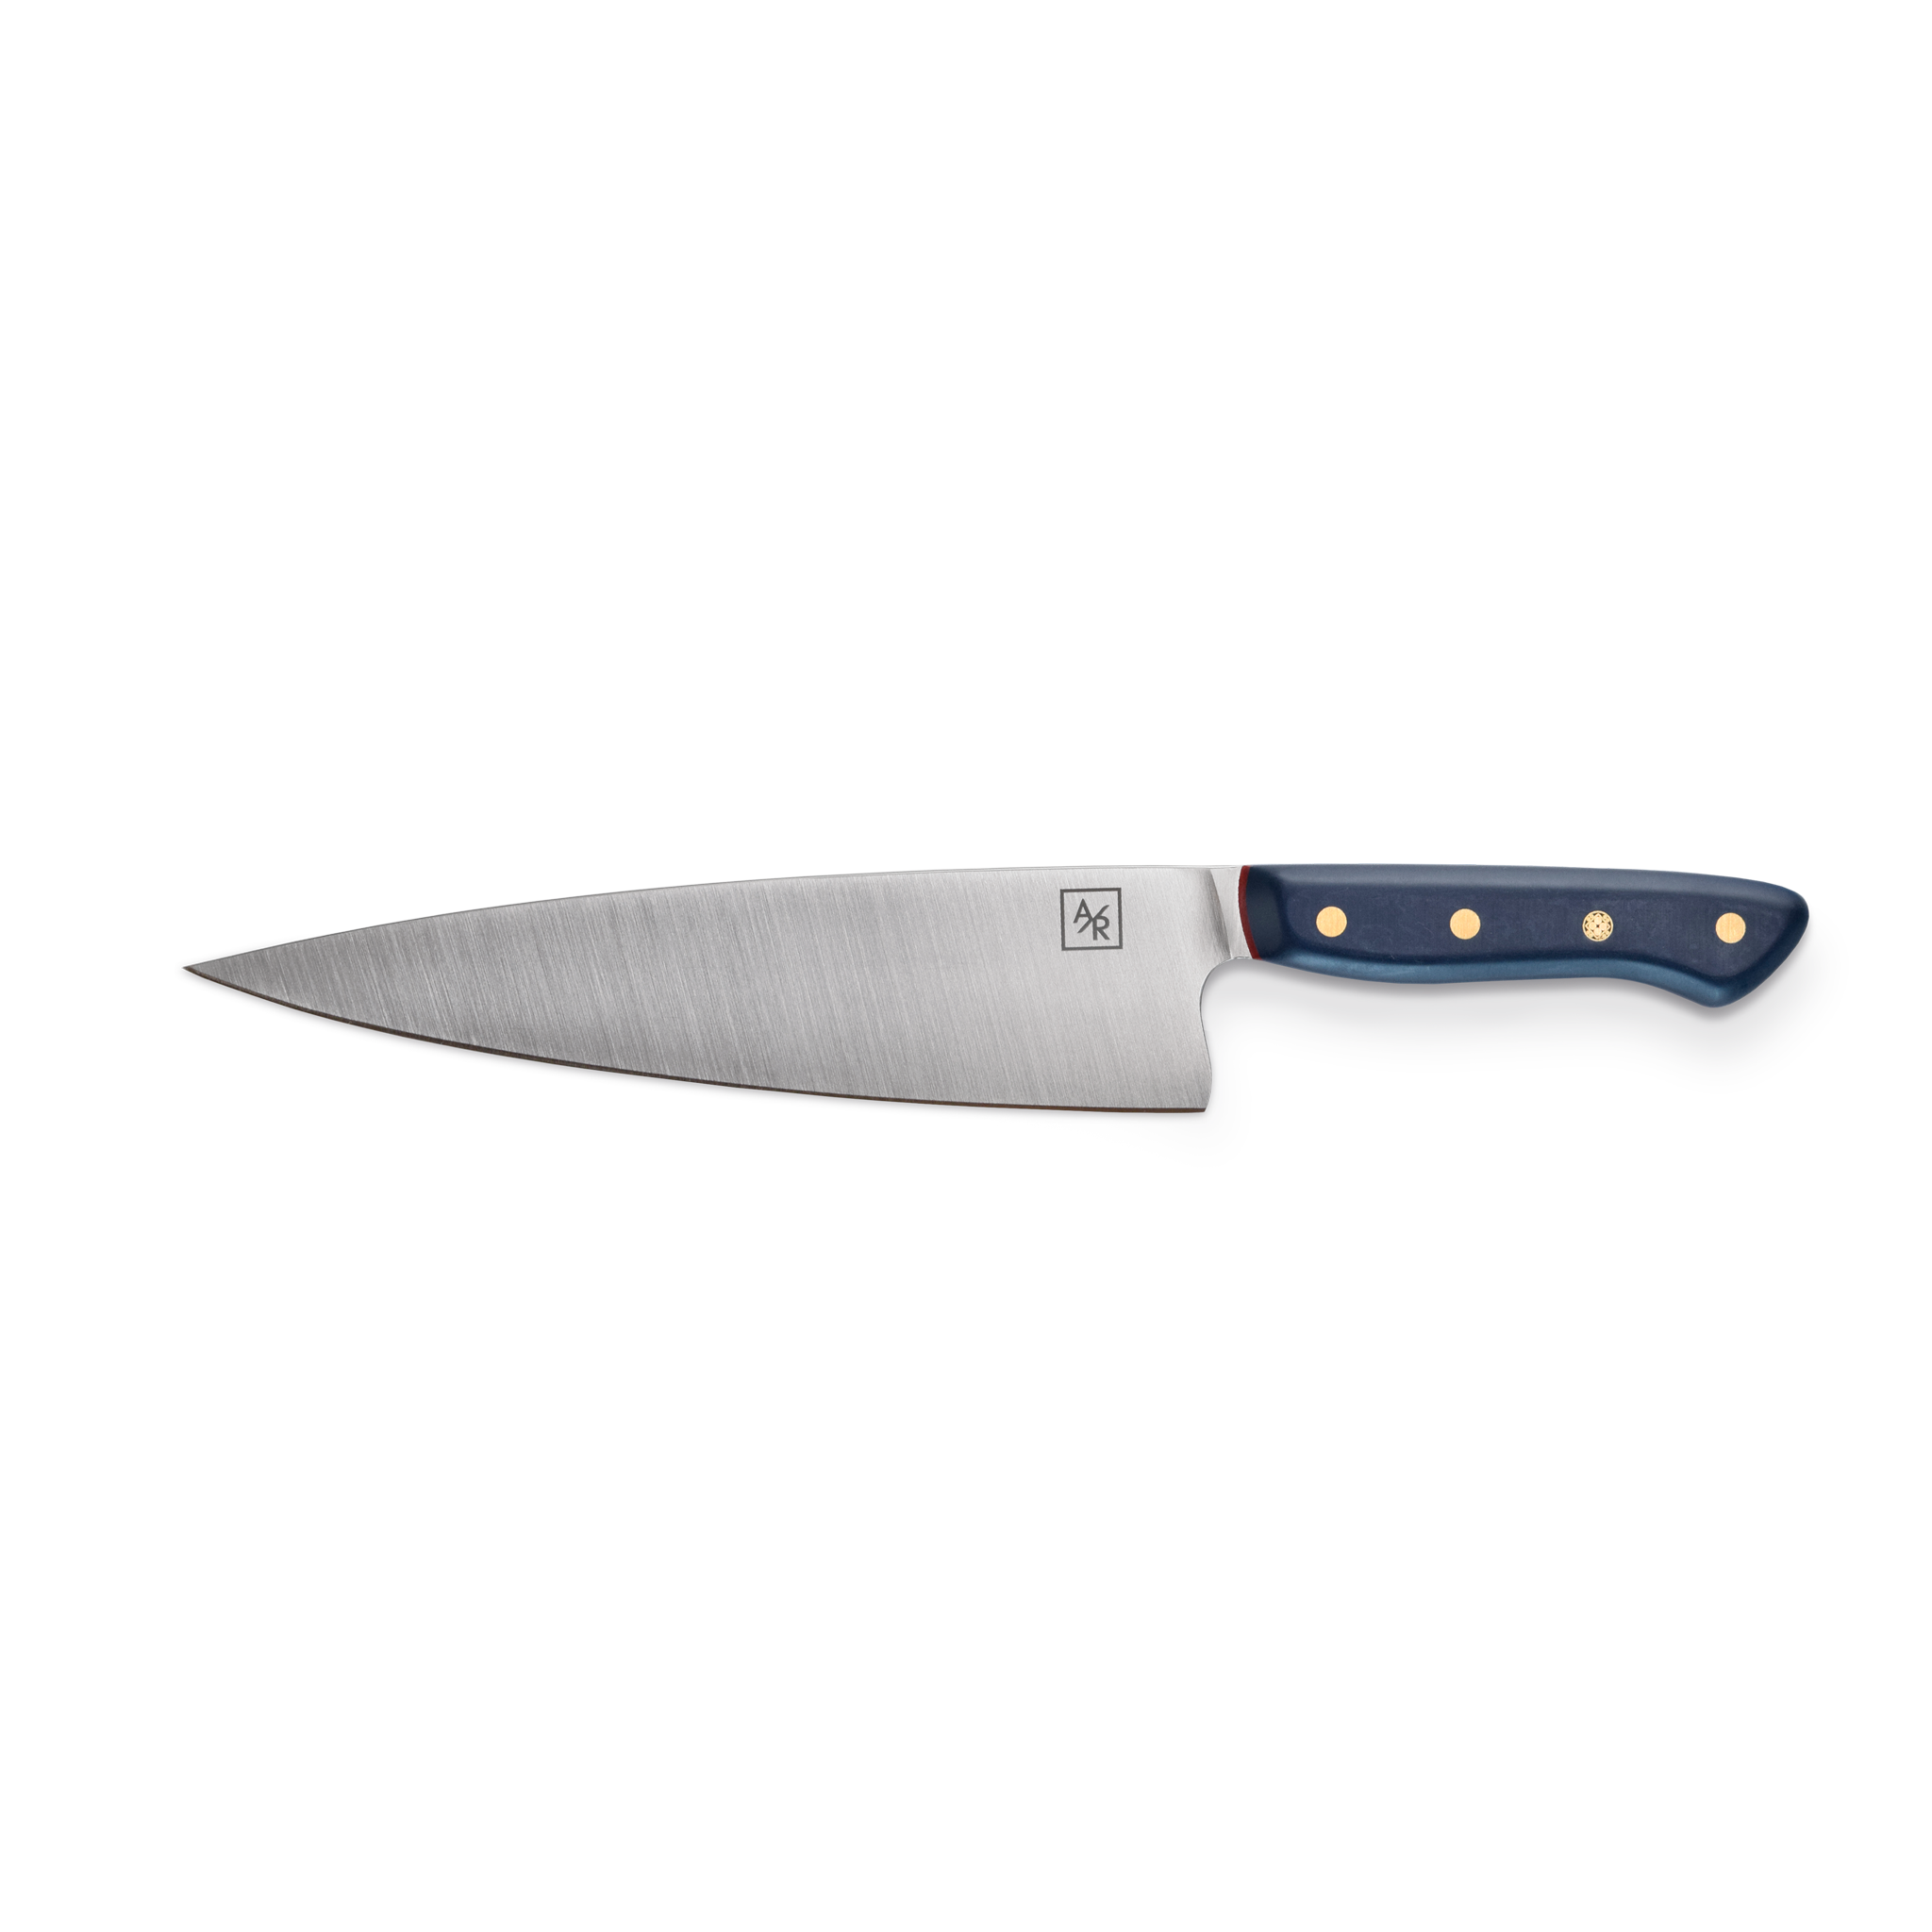 Nacionale Bladeworks  Shop Real Sharp Knives for Real Sharp Cooks